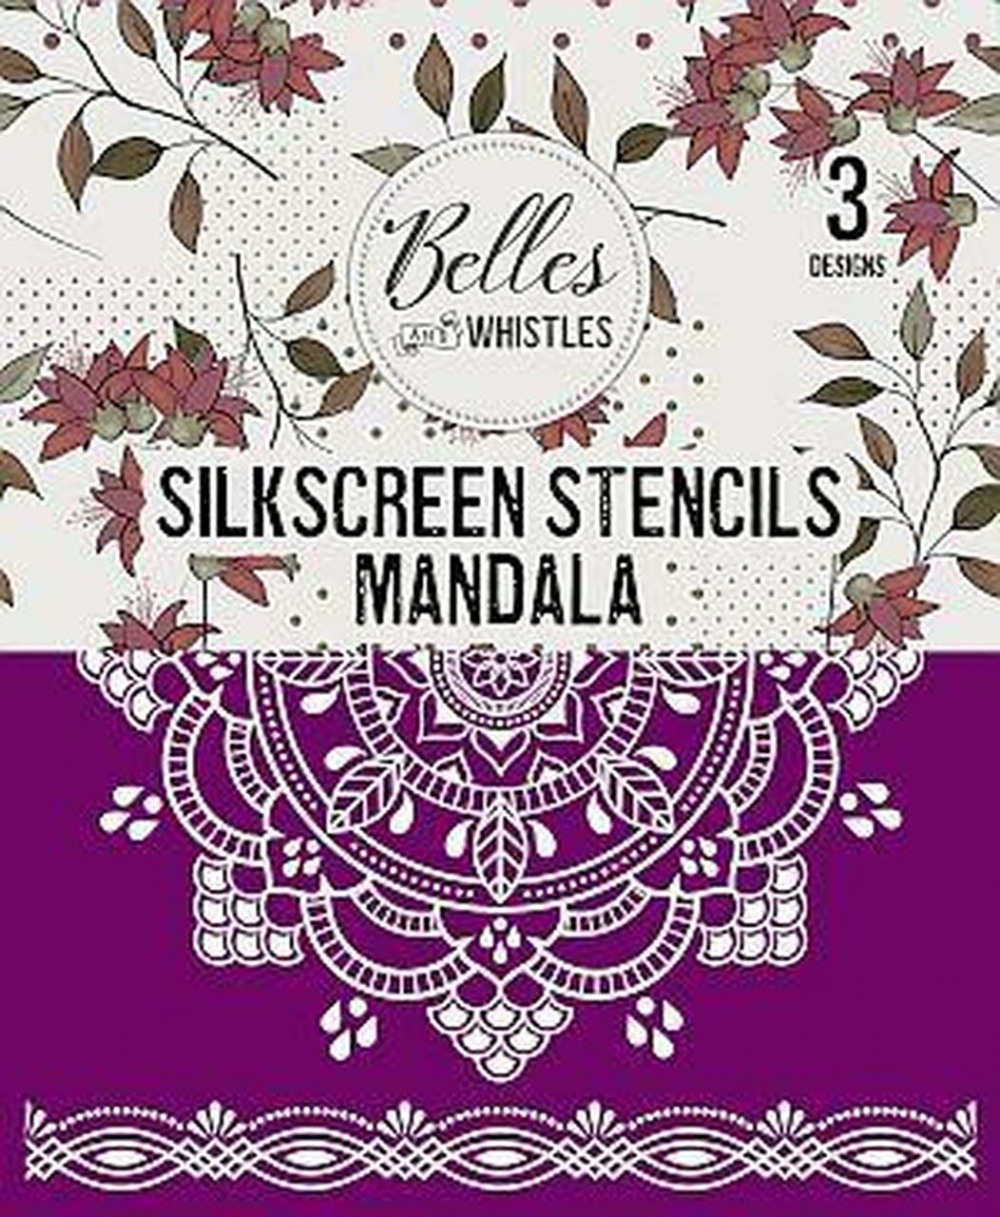 Belles and Whistles Silkscreen Stencil – Lightweight Adhesive – Reusable – Mandala 20x25cm